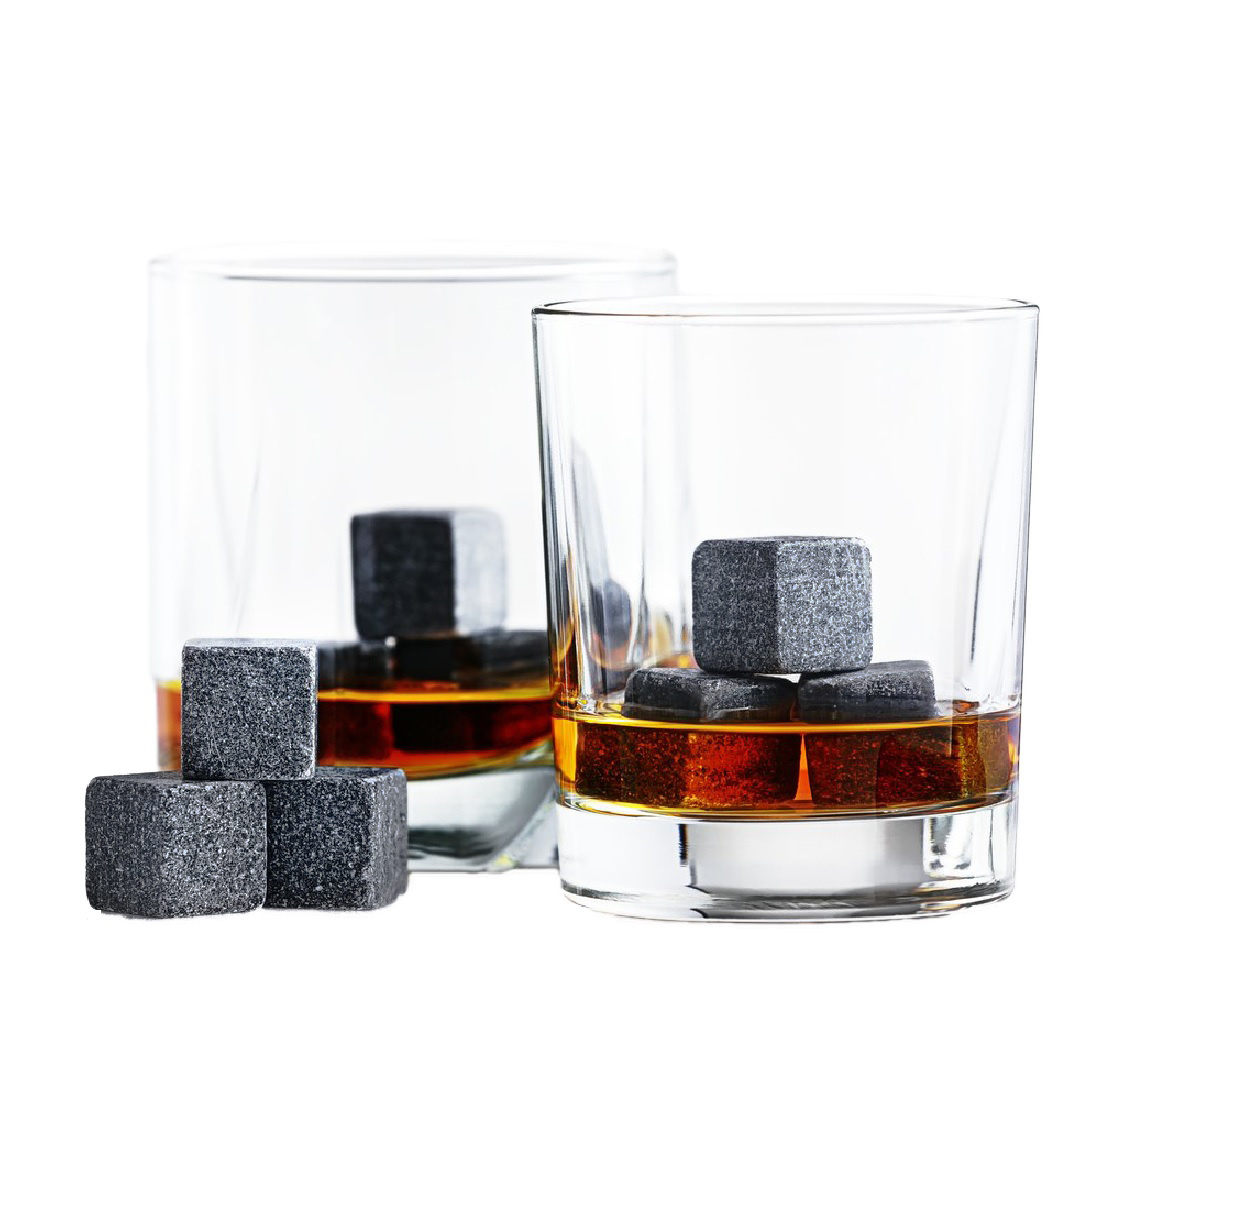 Nomfy Whiskey Stenen Voor Koude Drankjes - Herbruikbare Whiskey Stones - Whiskeystenen IJsblokjes - 18 Stuks